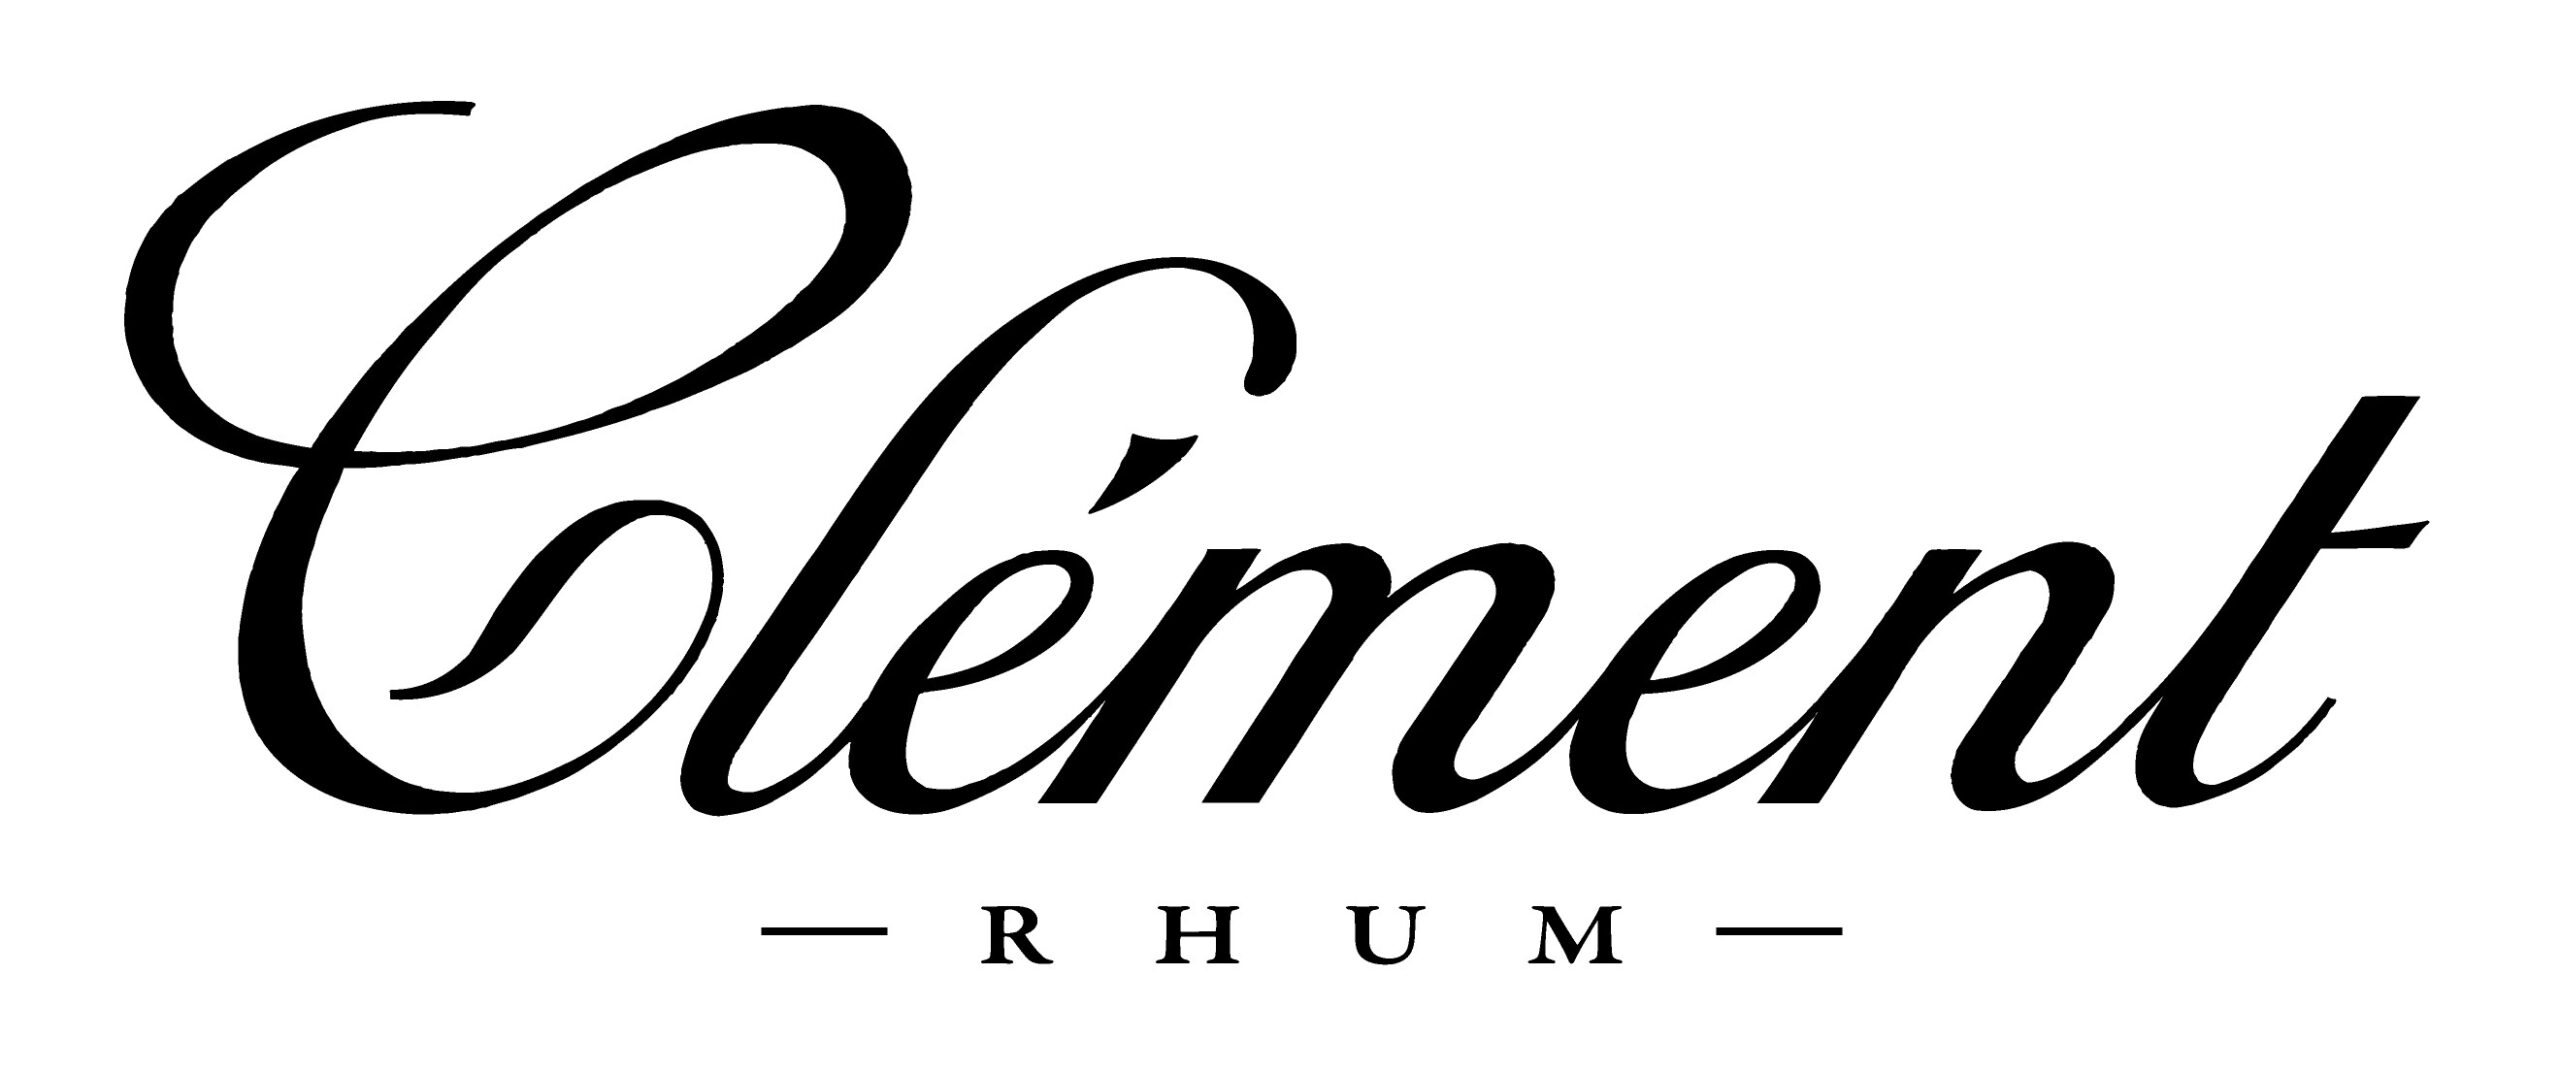 Clement logo